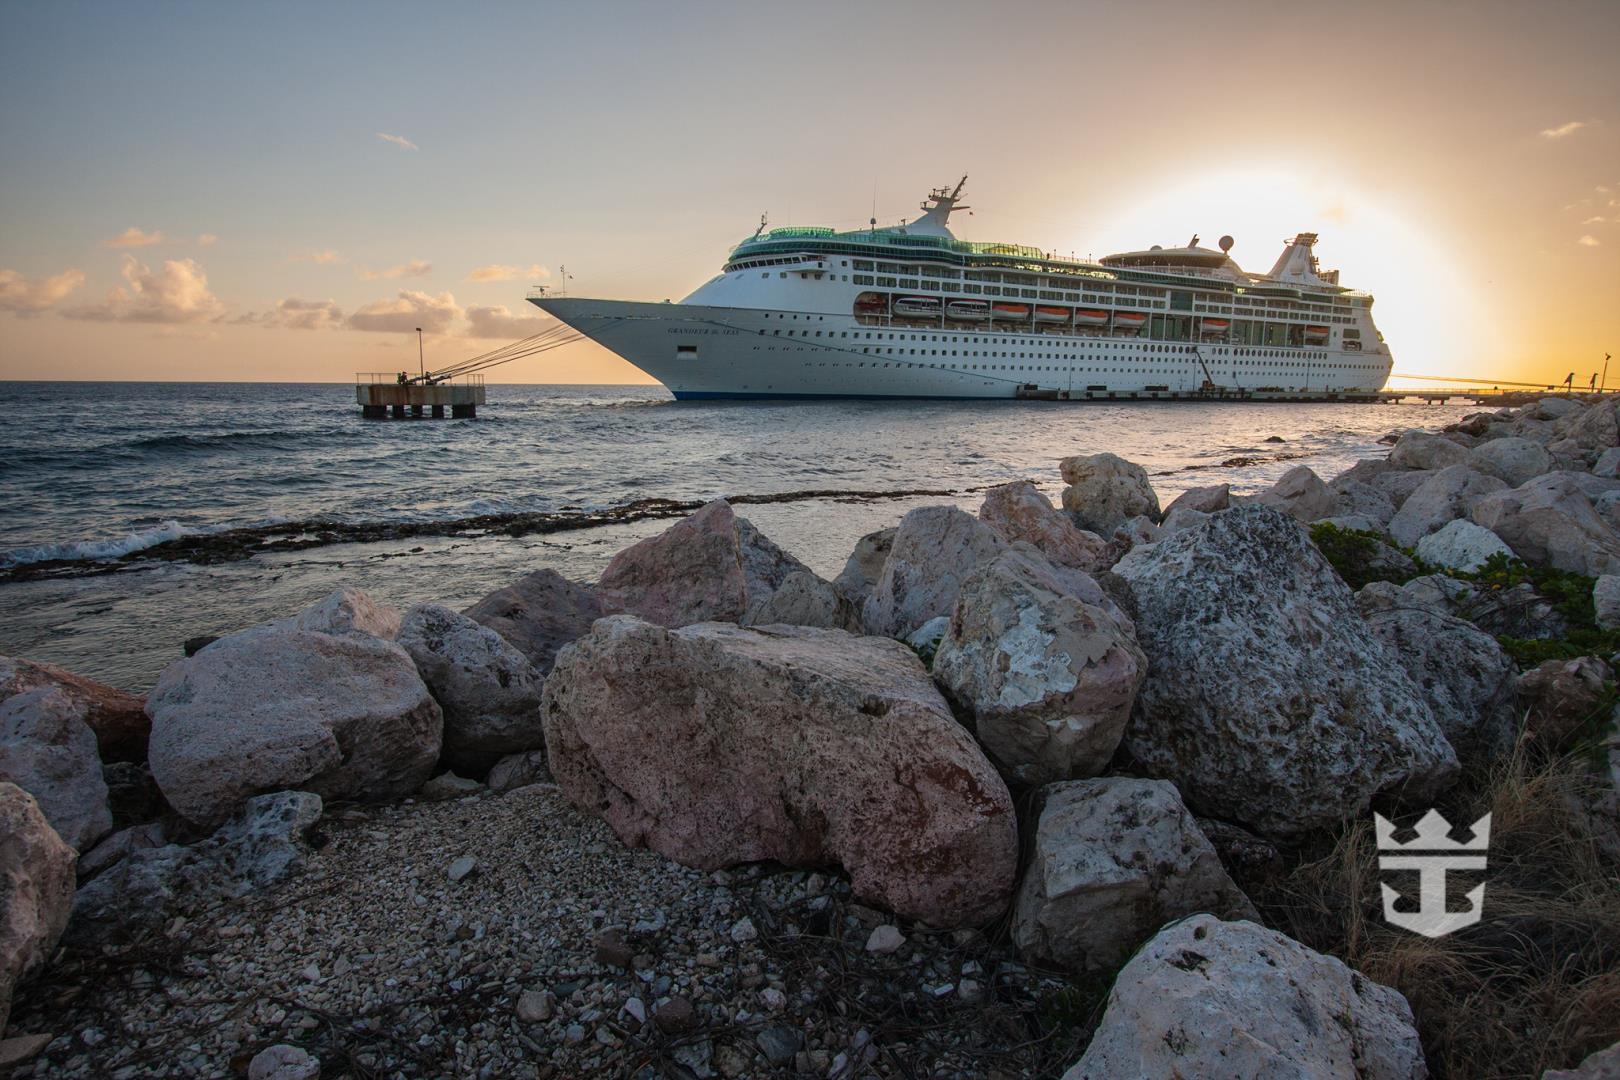 Bahamas Getaway Cruise